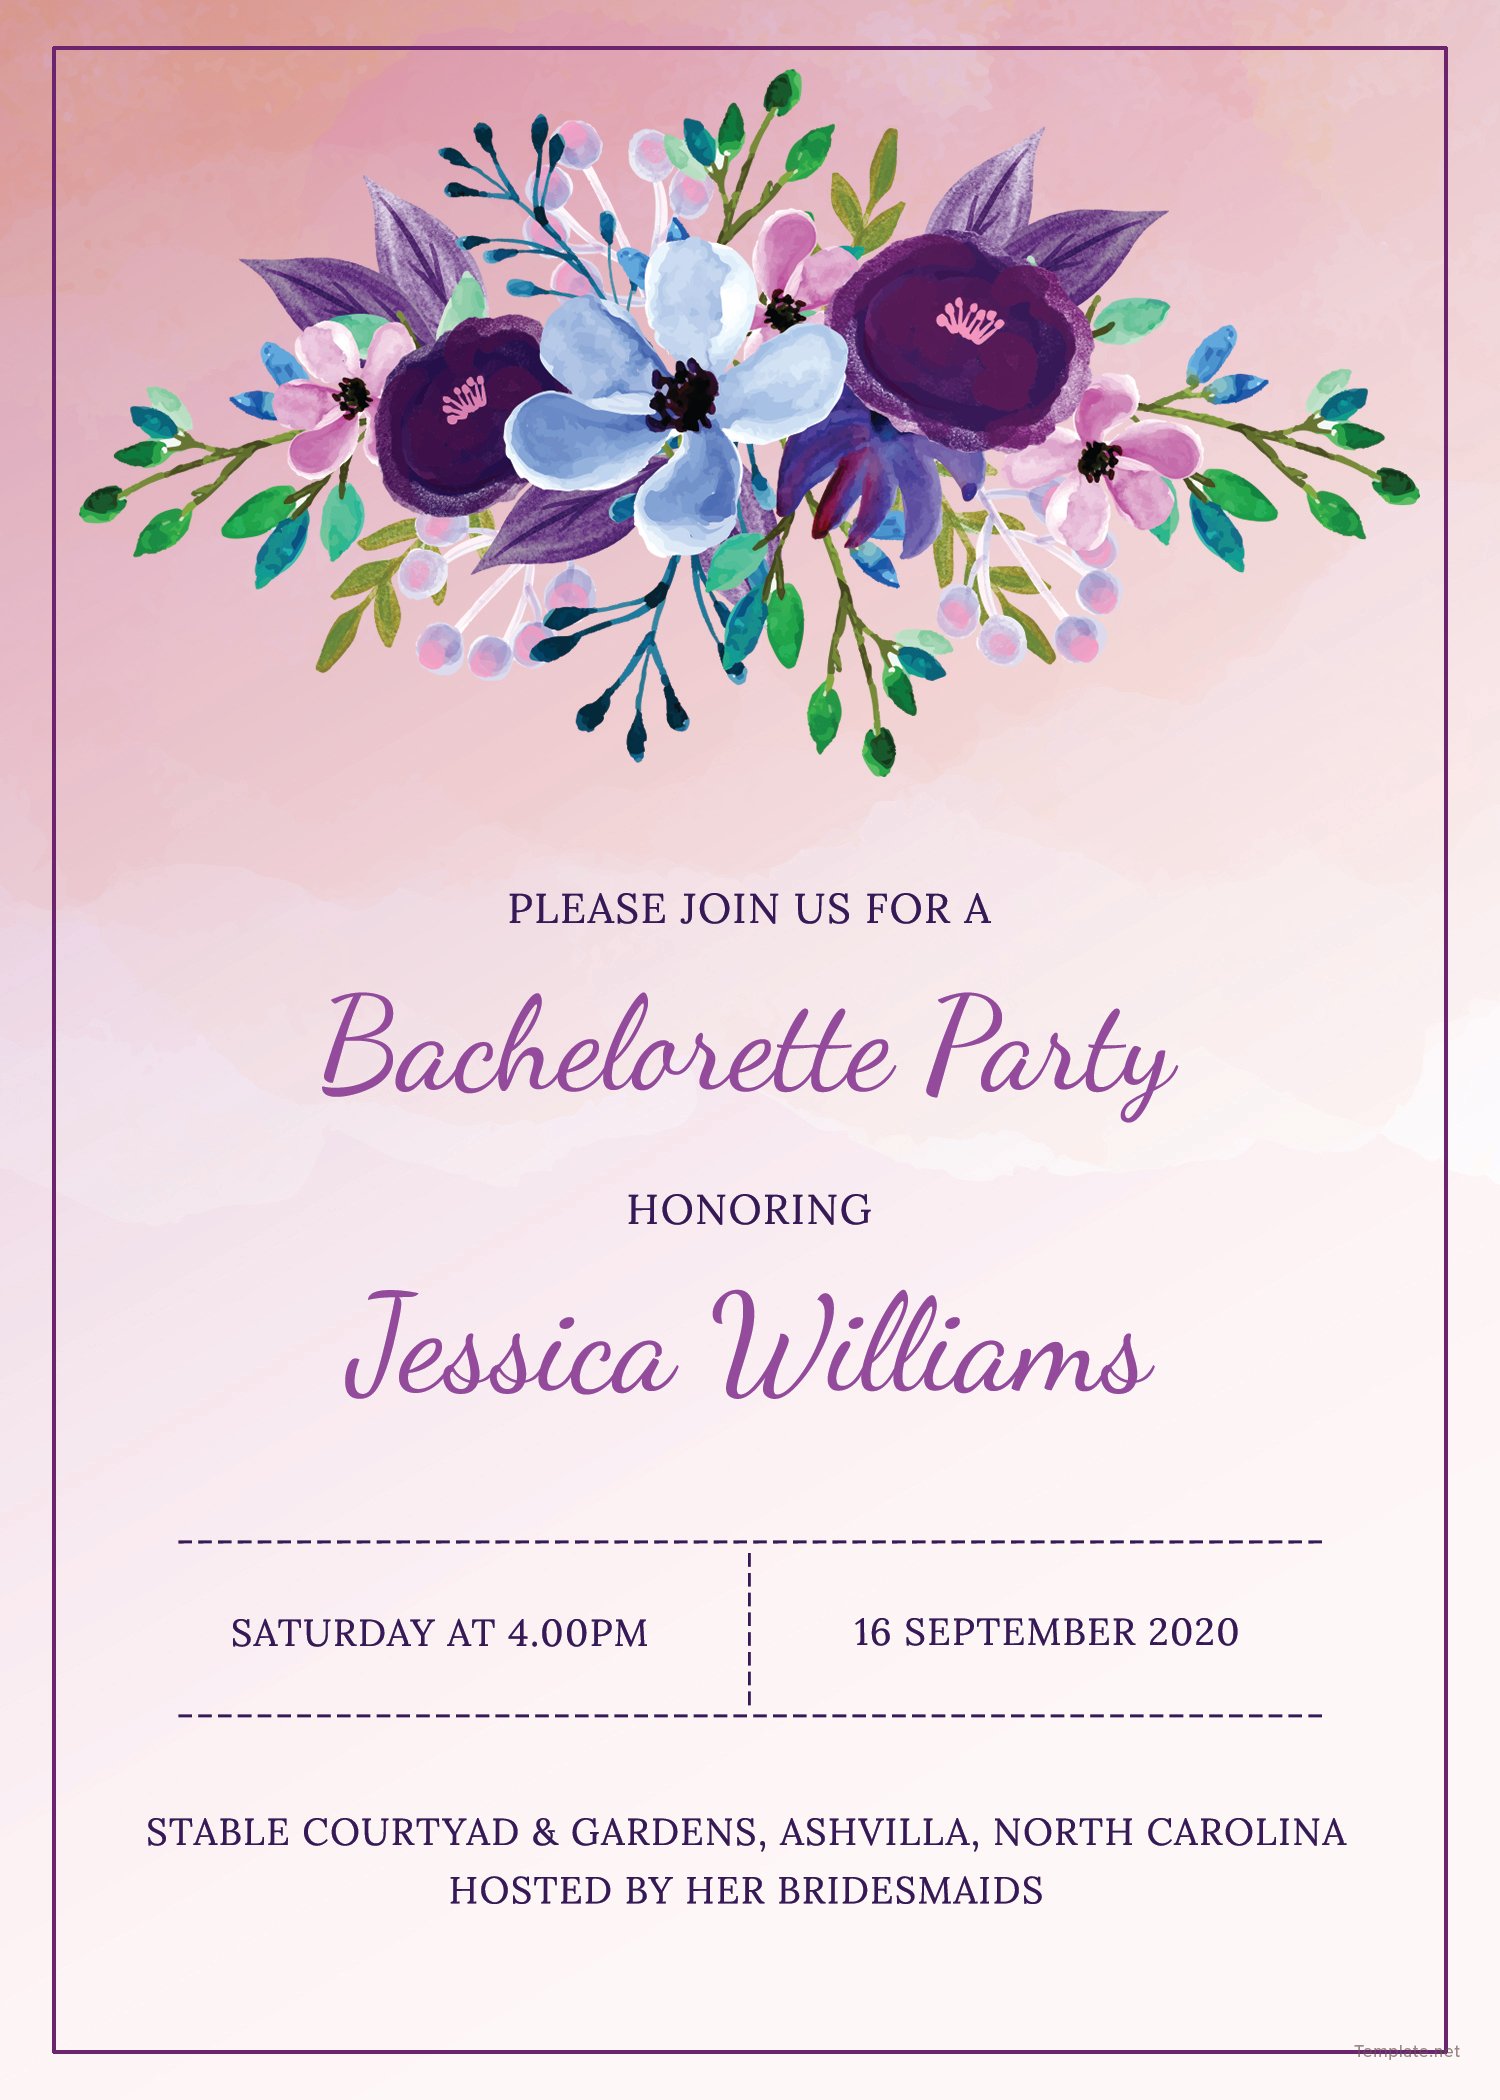 Printable Bachelorette Party Invitation Template in Adobe Photoshop